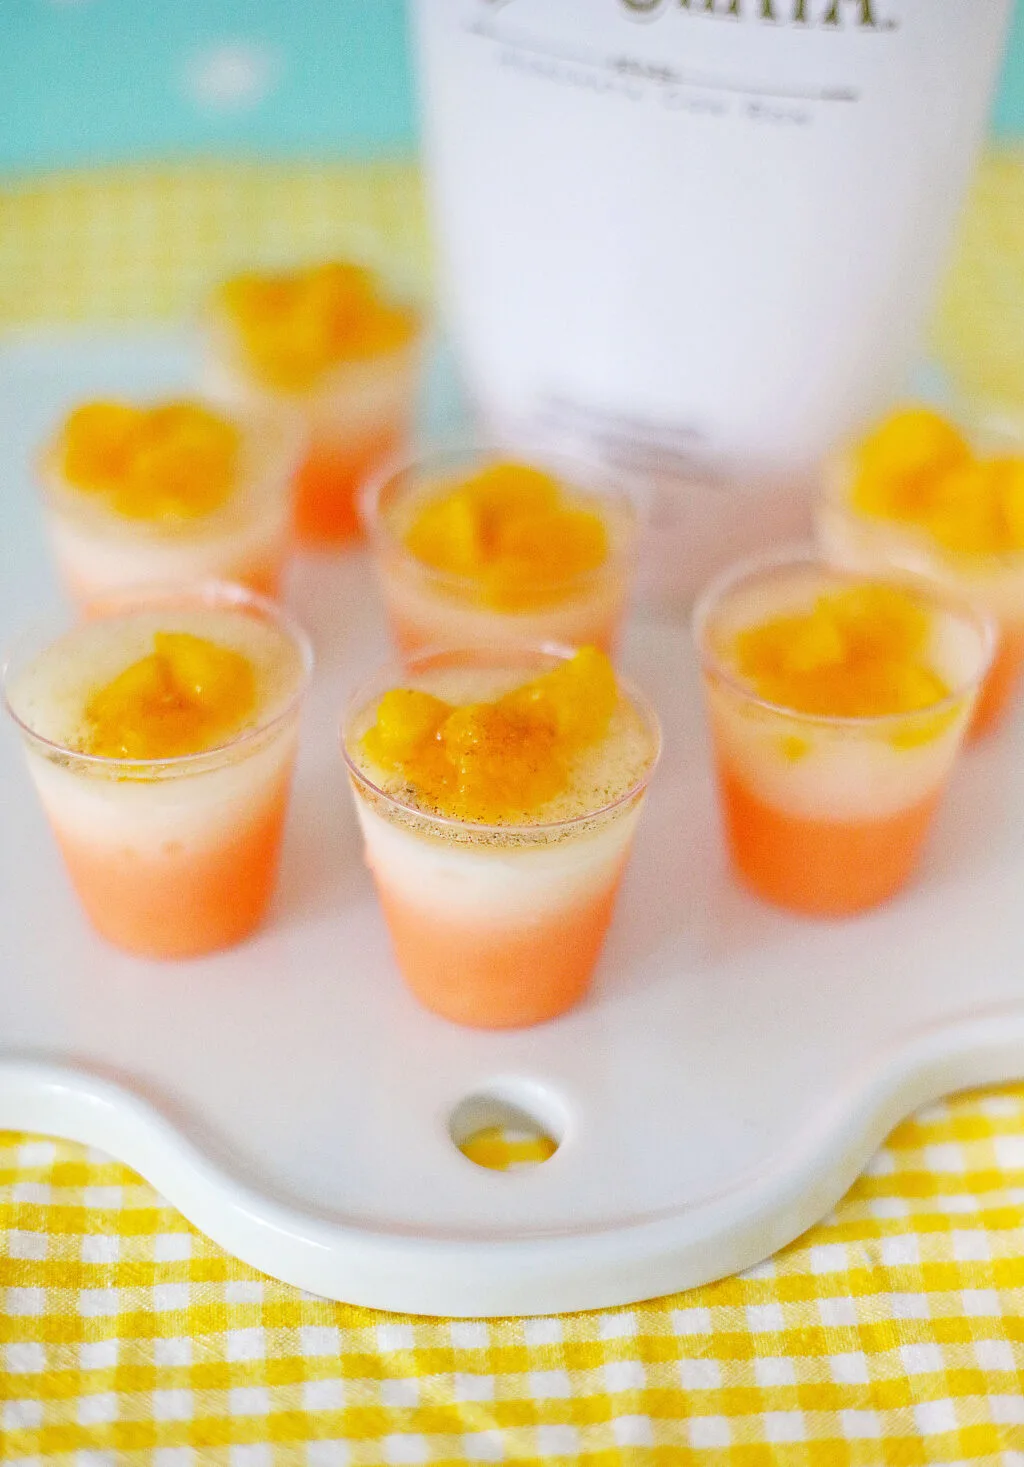 peach jello shots on table with yellow napkin